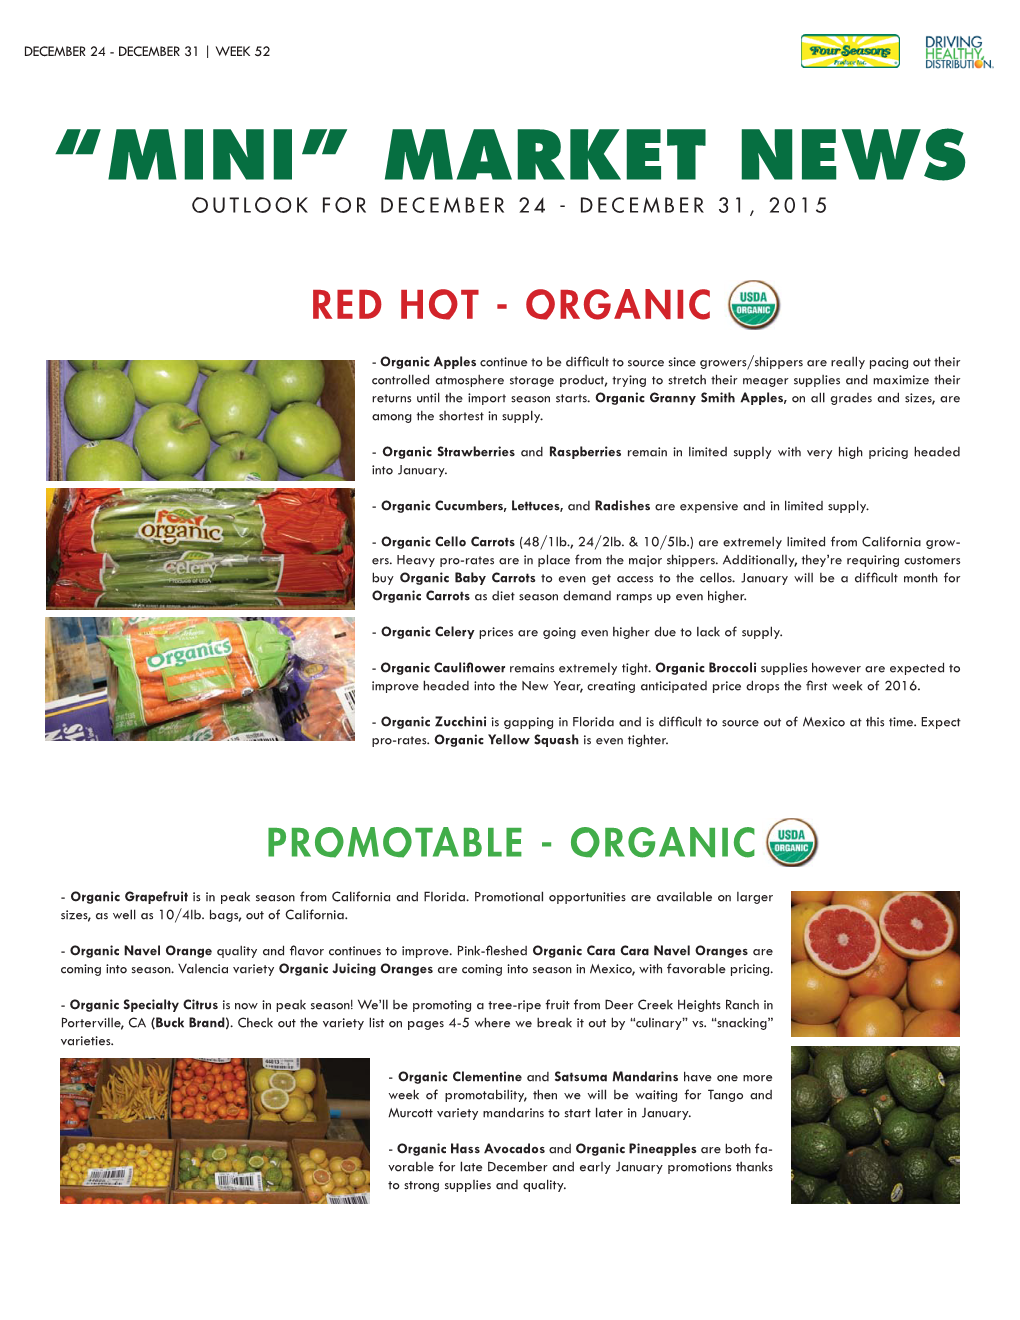 Market News 52 15.Indd